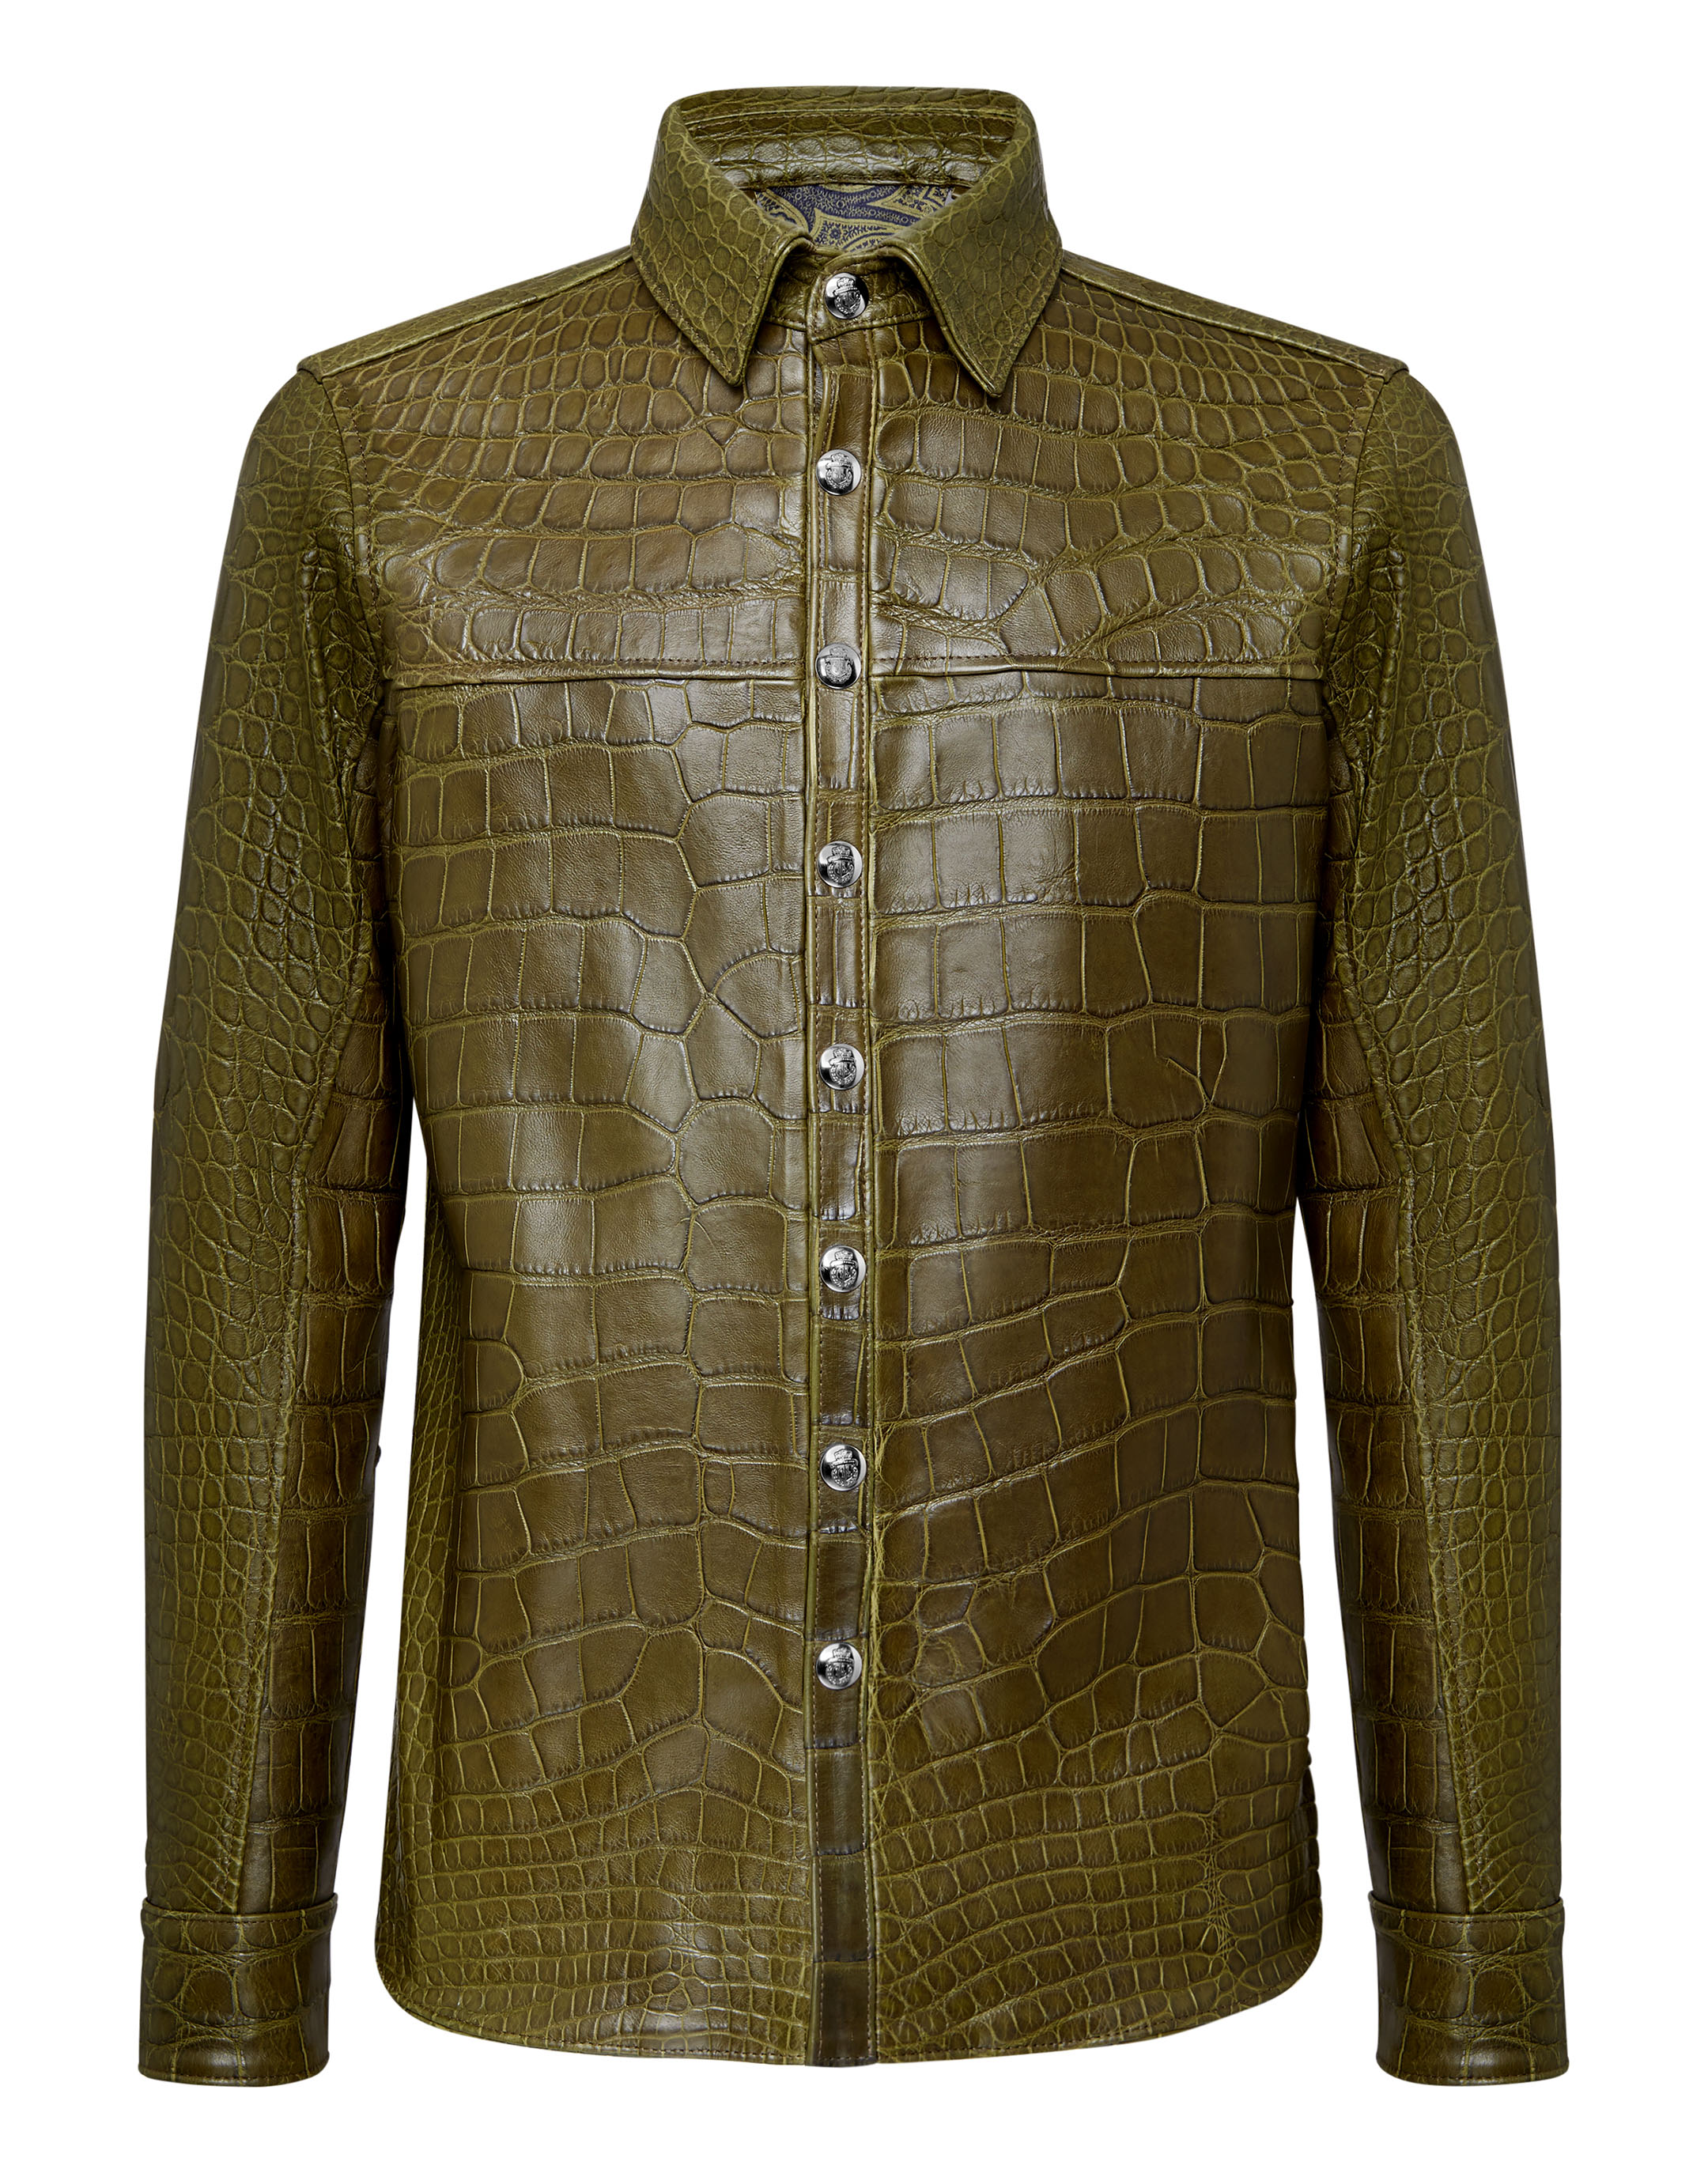 Crocodile Leather Shirts Luxury Billionaire